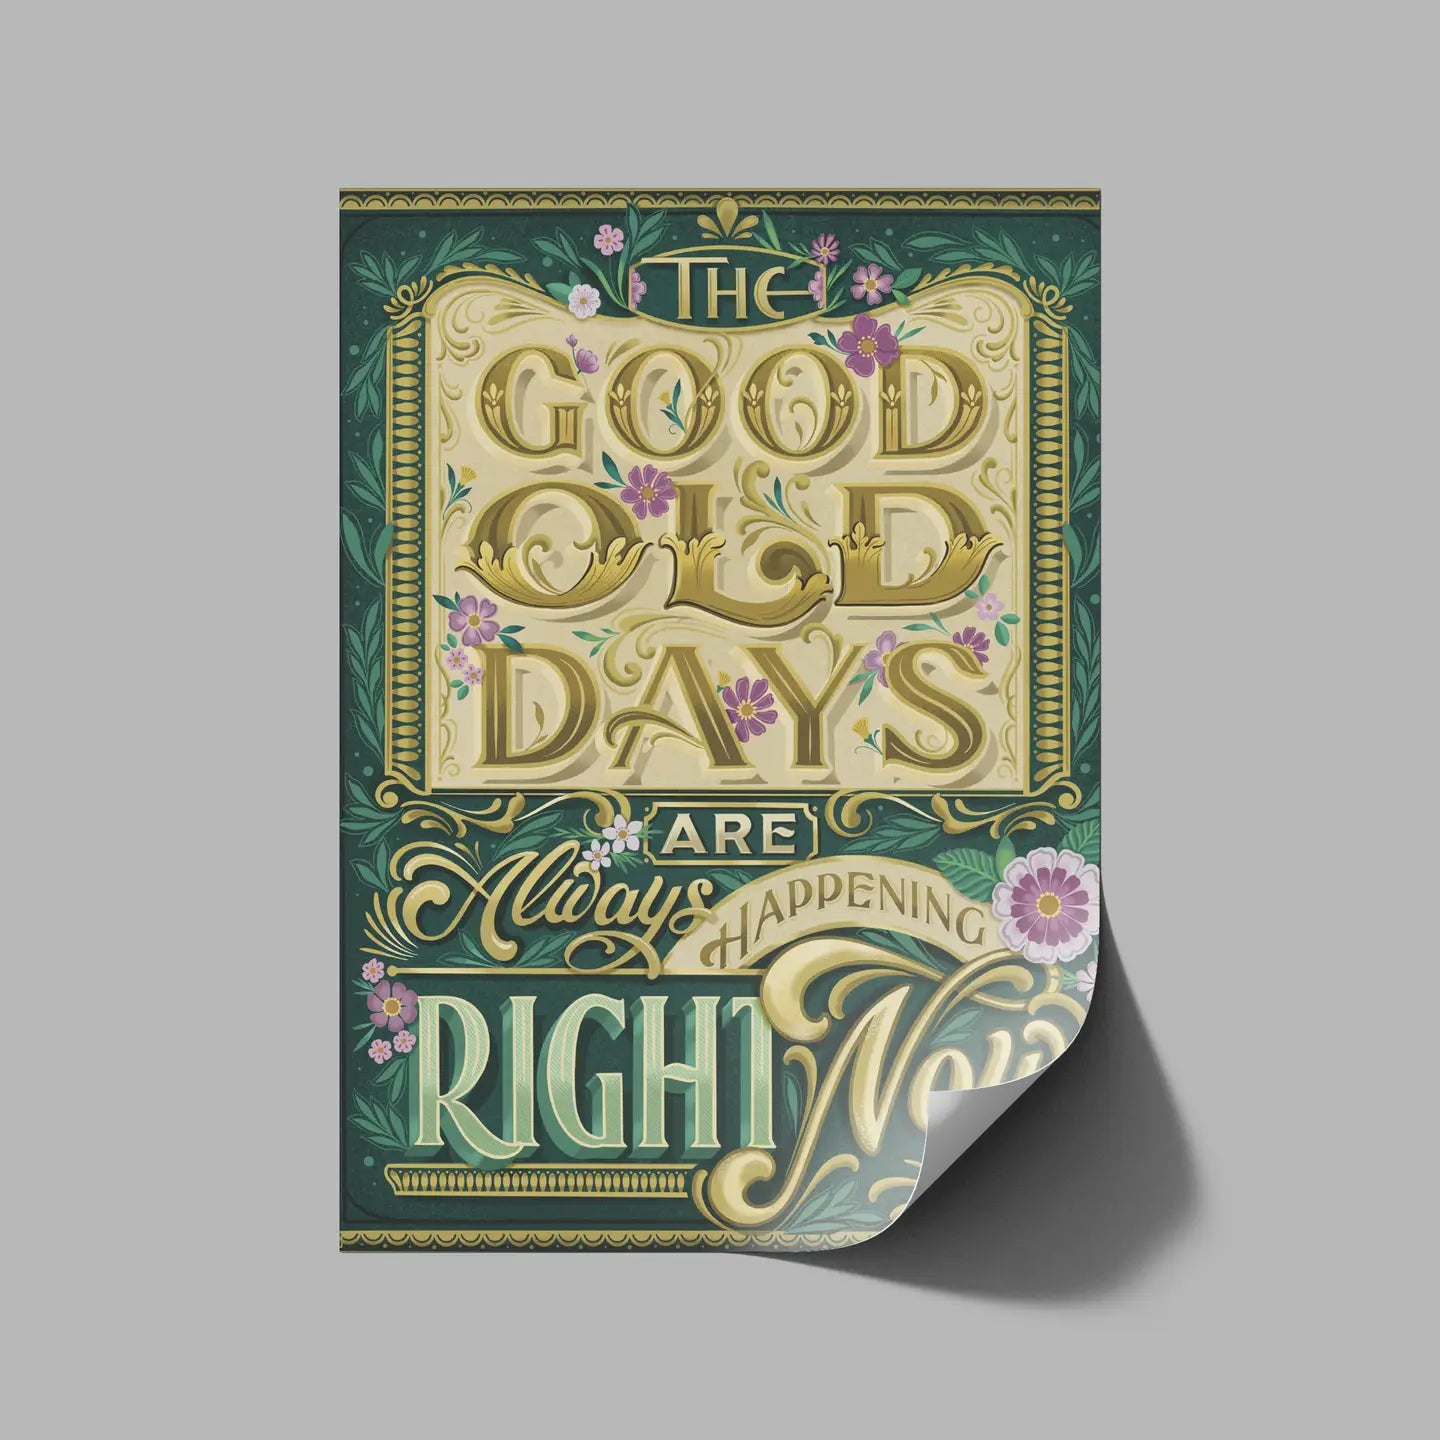 Art Print - The Good Old Days 11 x 14